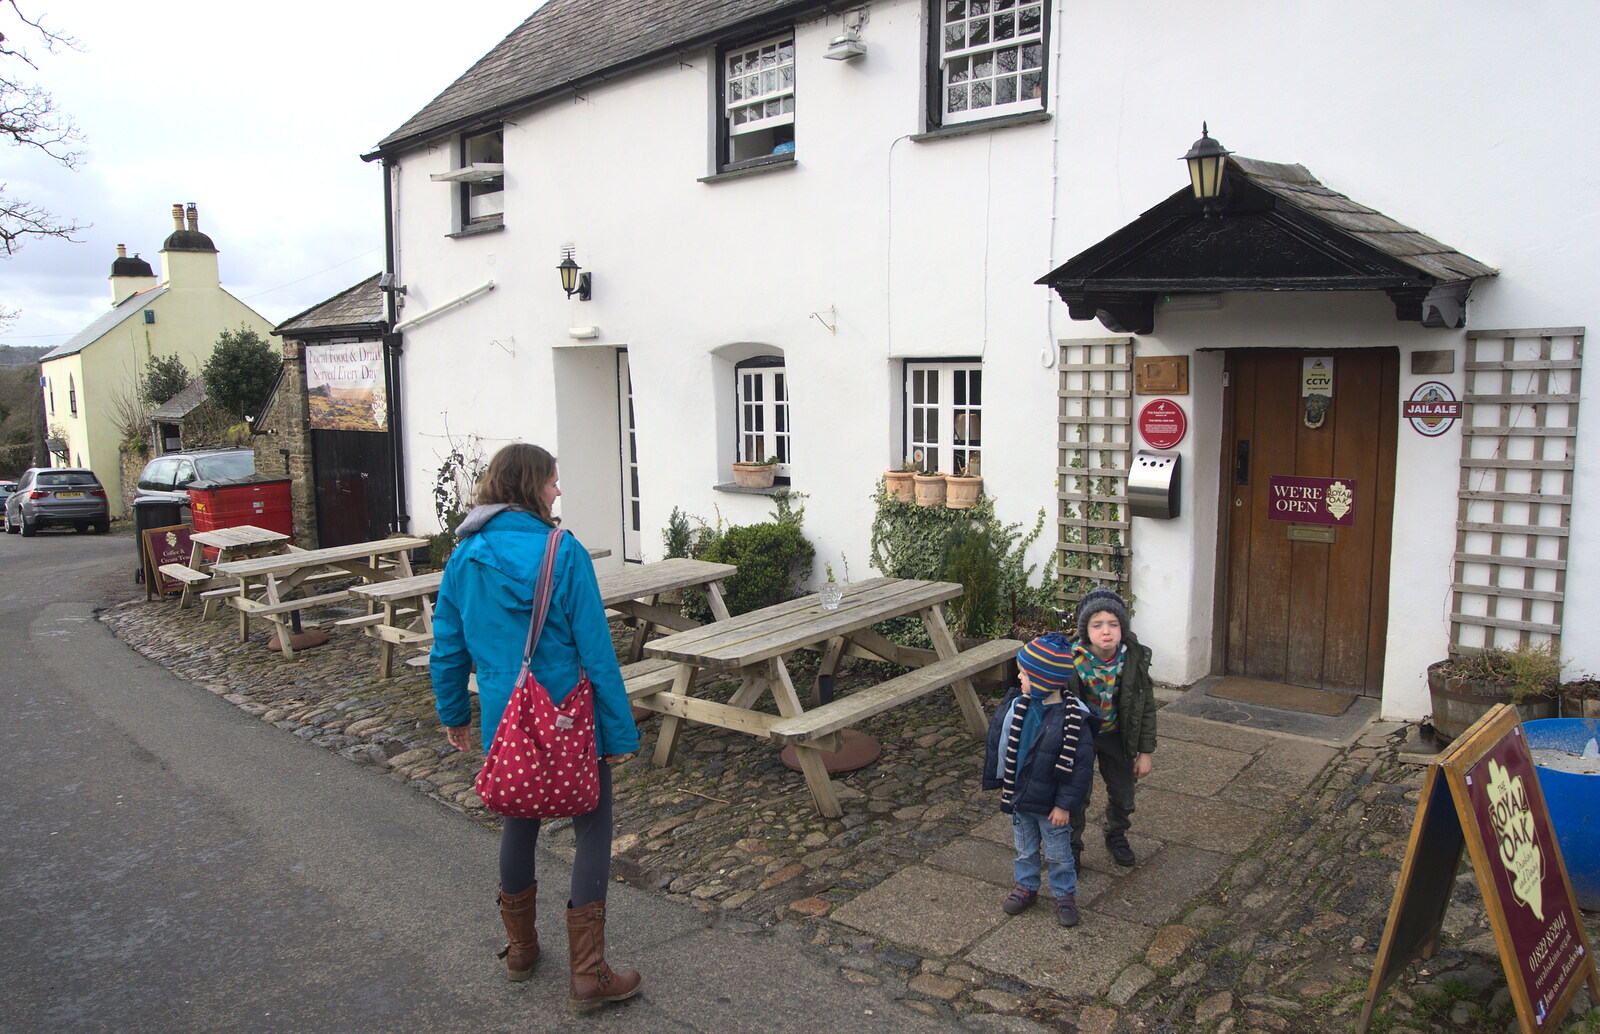 The Royal Oak in Meavy from A Trip to Grandma J's, Spreyton, Devon - 18th February 2015